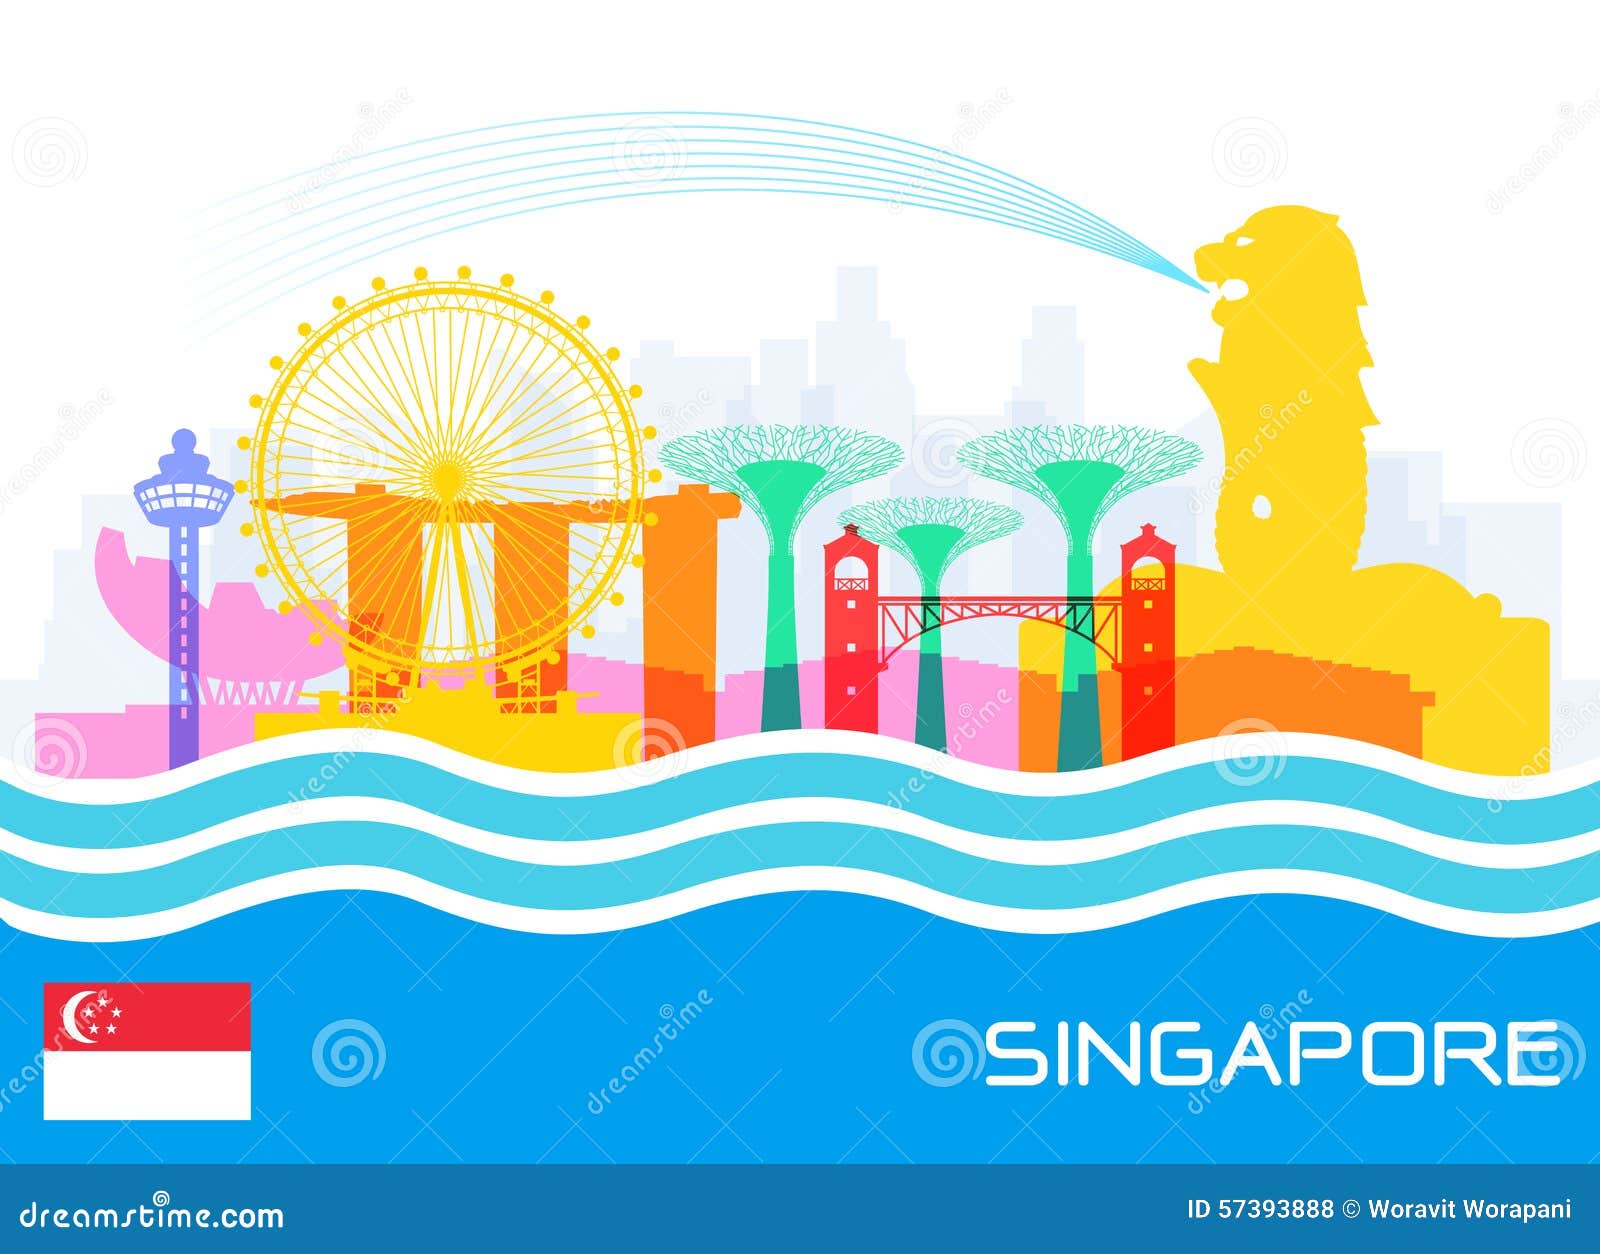 singapore flyer clipart - photo #4